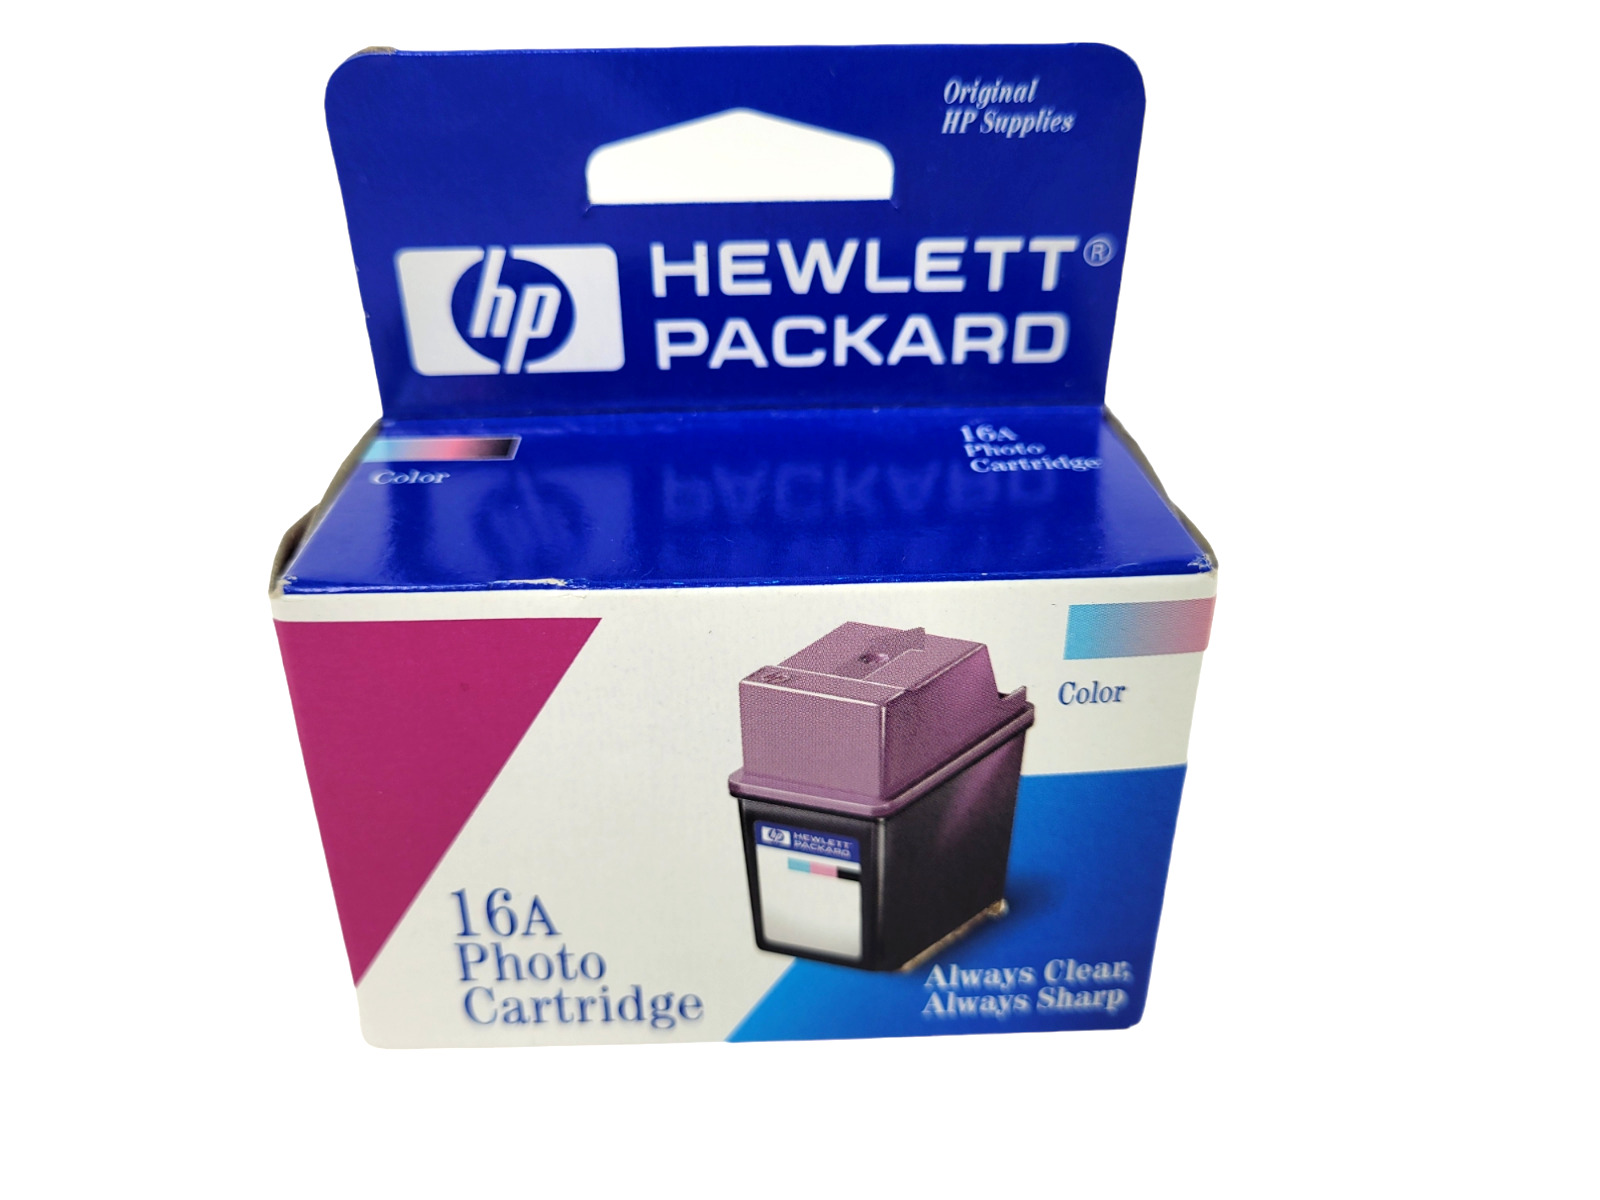 Hewlett Packard 16A Photo Cartridge C1816A Color Clear Sharp Expired 1998